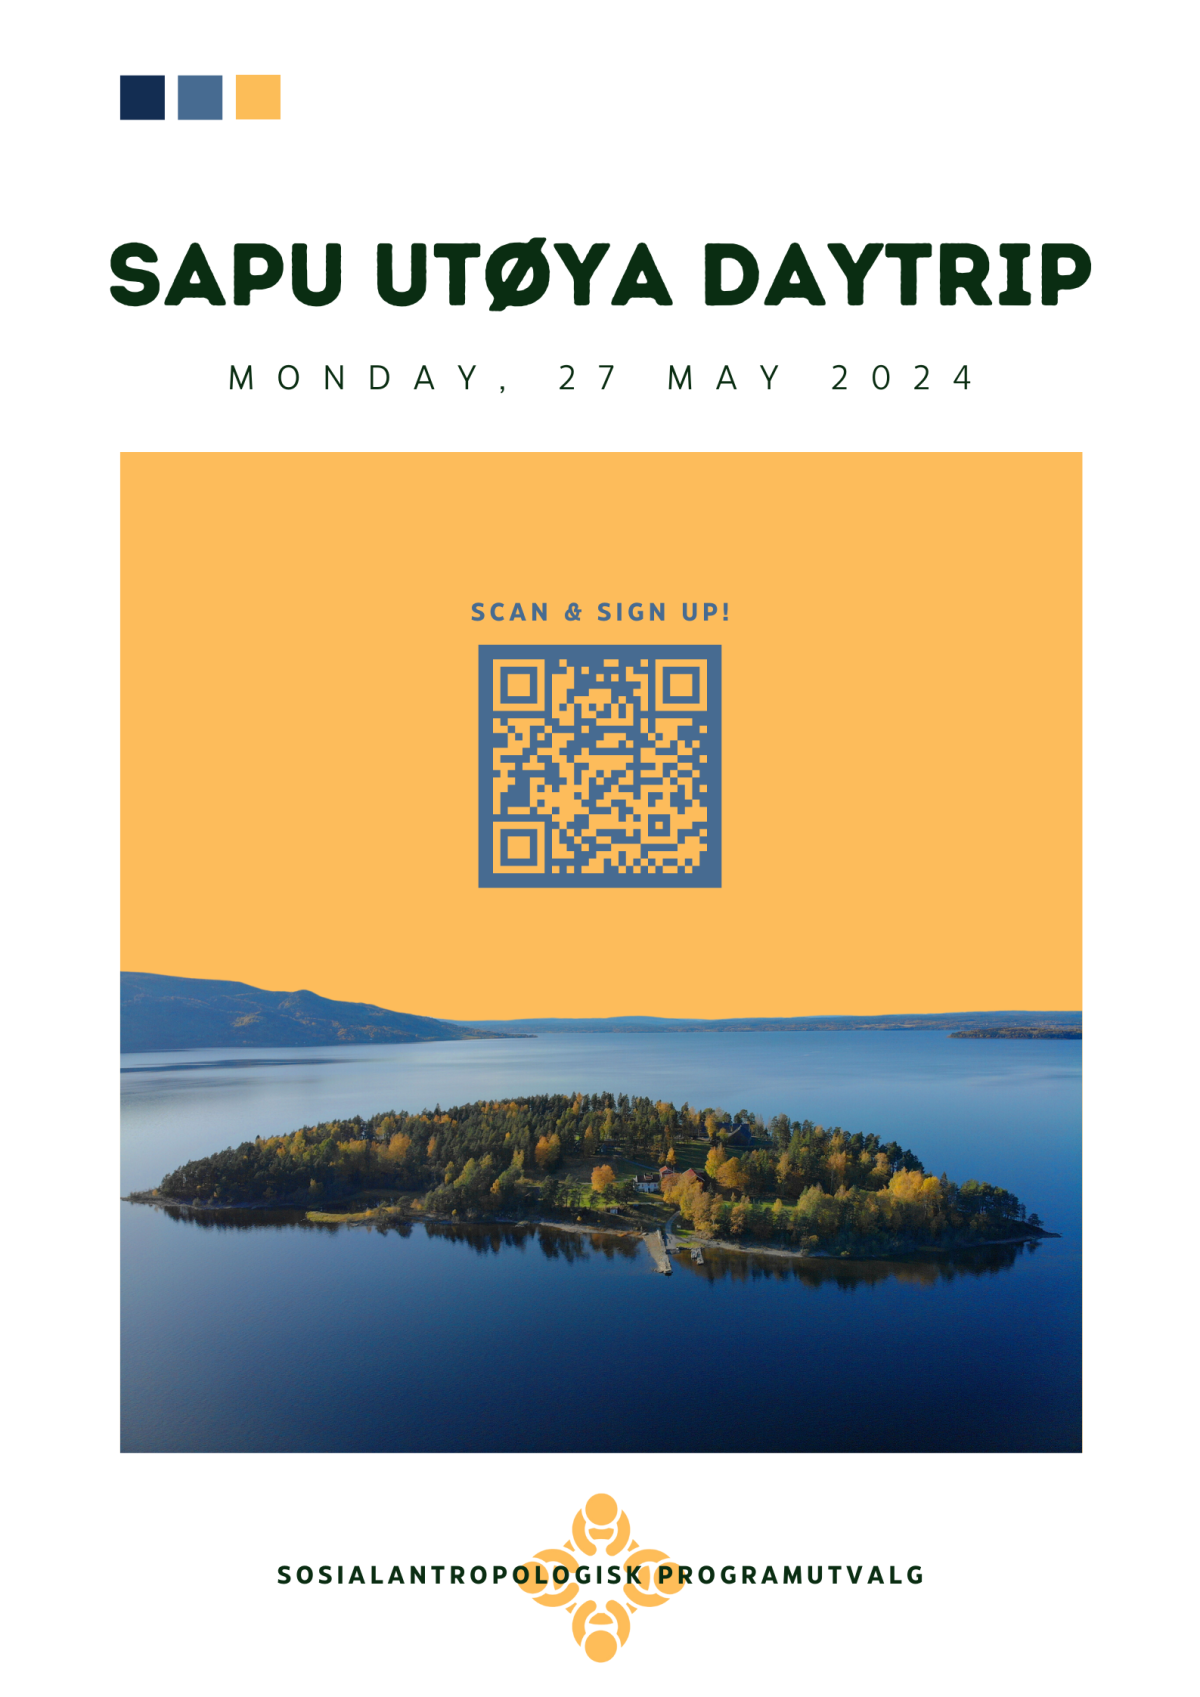 SAPU Daytrip at Utøya